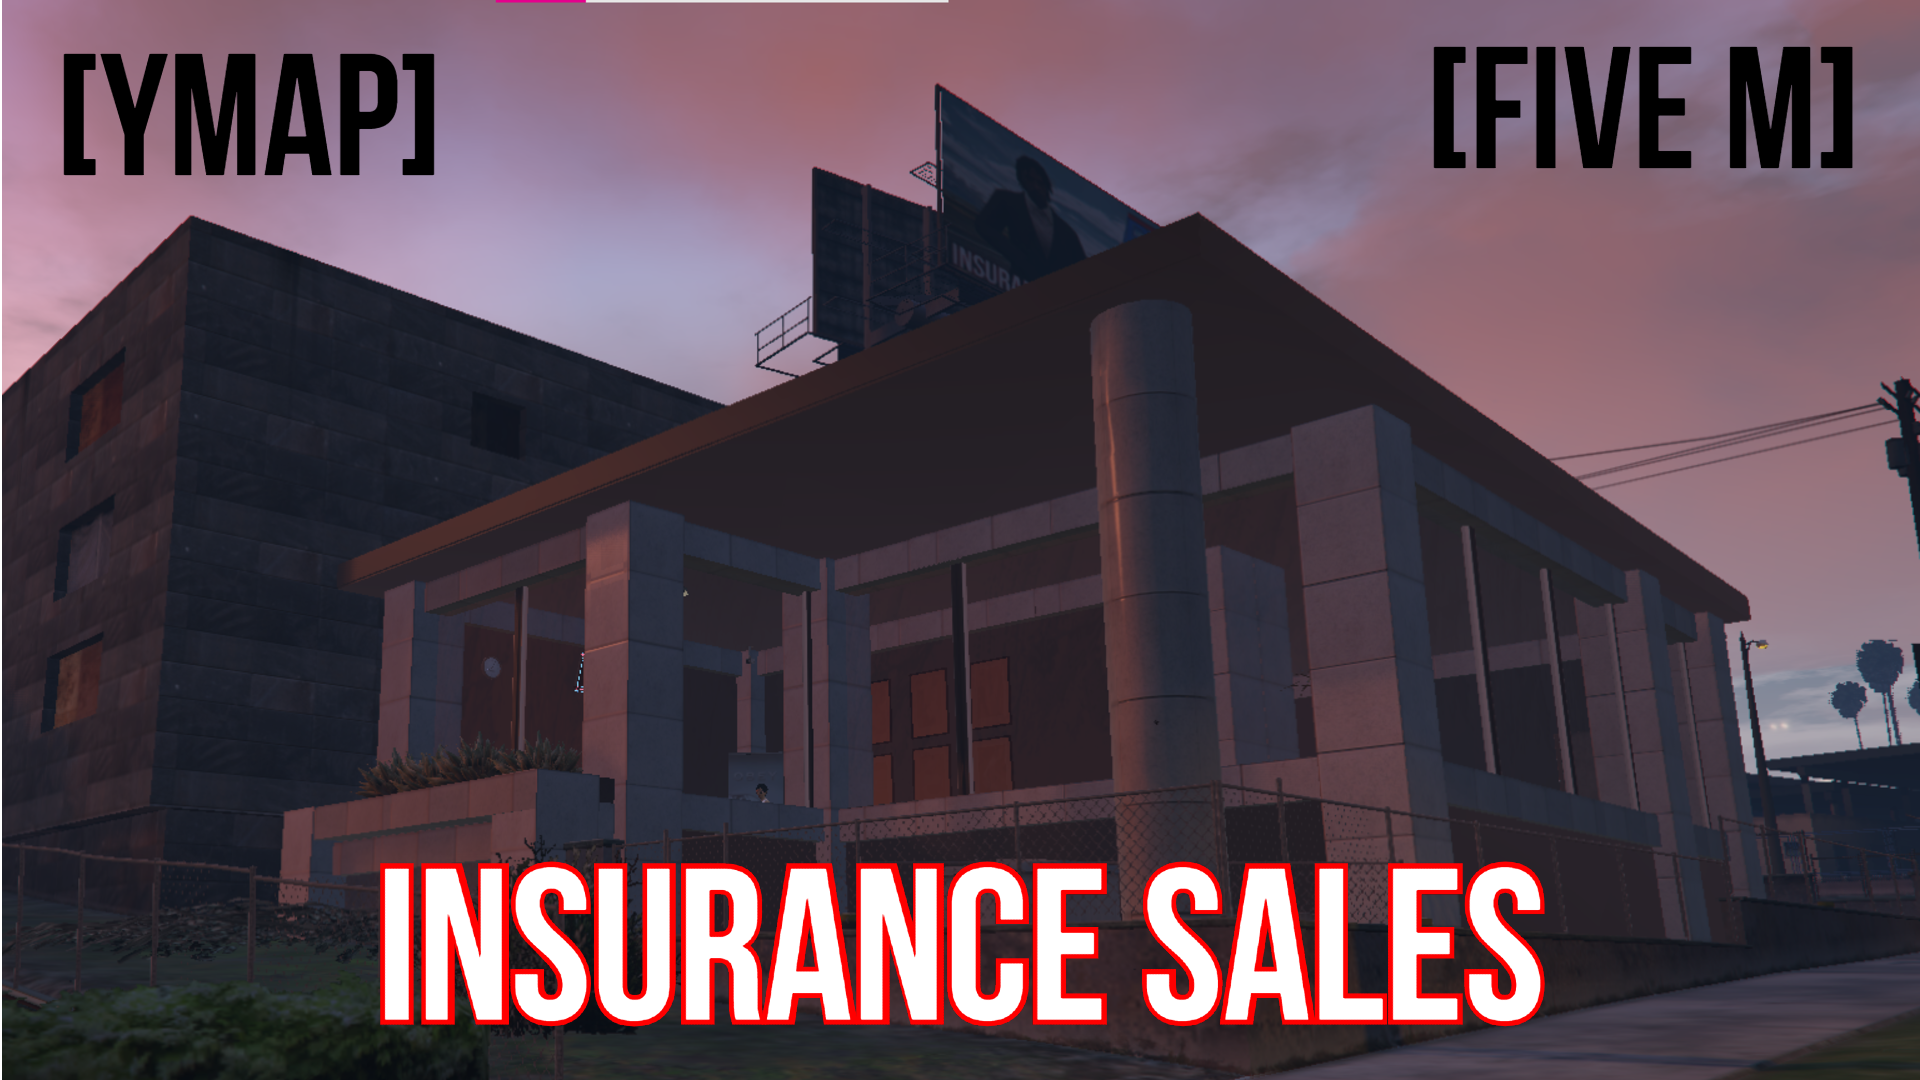 Sale Of Insurance PDM [FiveM/YMAP] v2